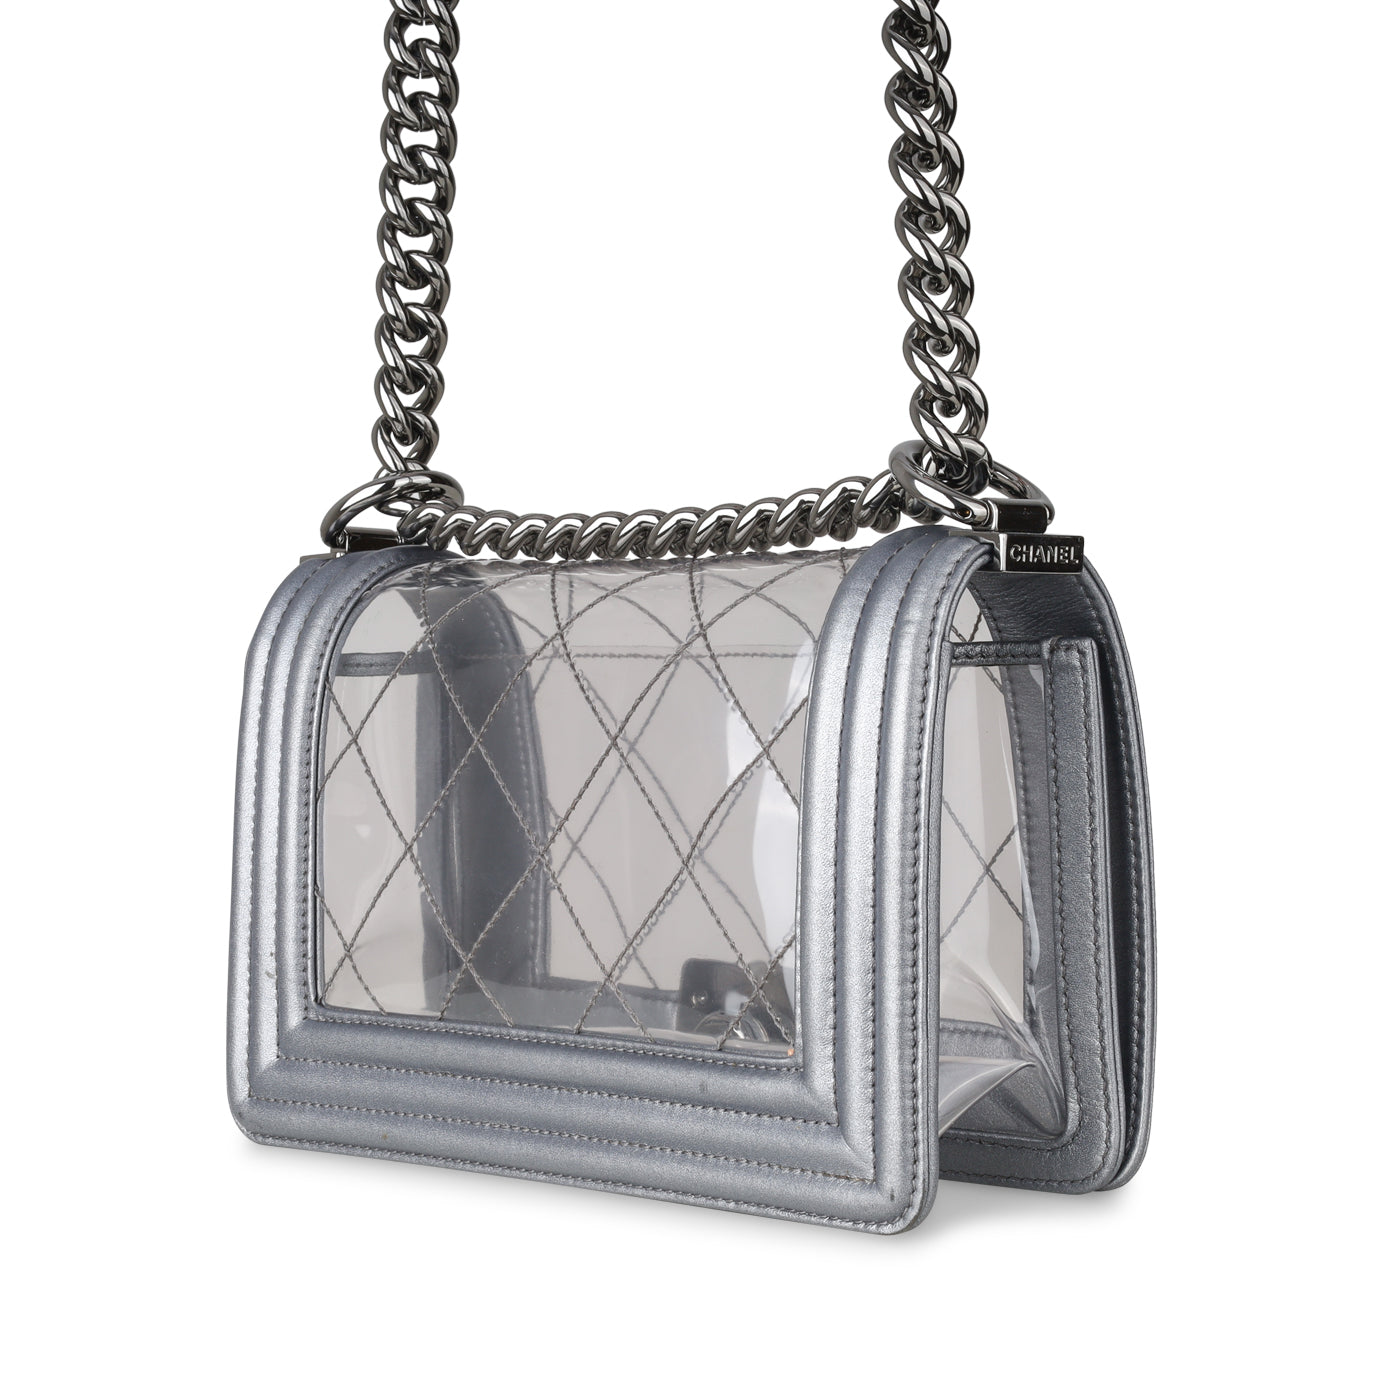 Chanel - Small Boy Bag - Transparent - Ruthenium Hardware - Pre-Loved